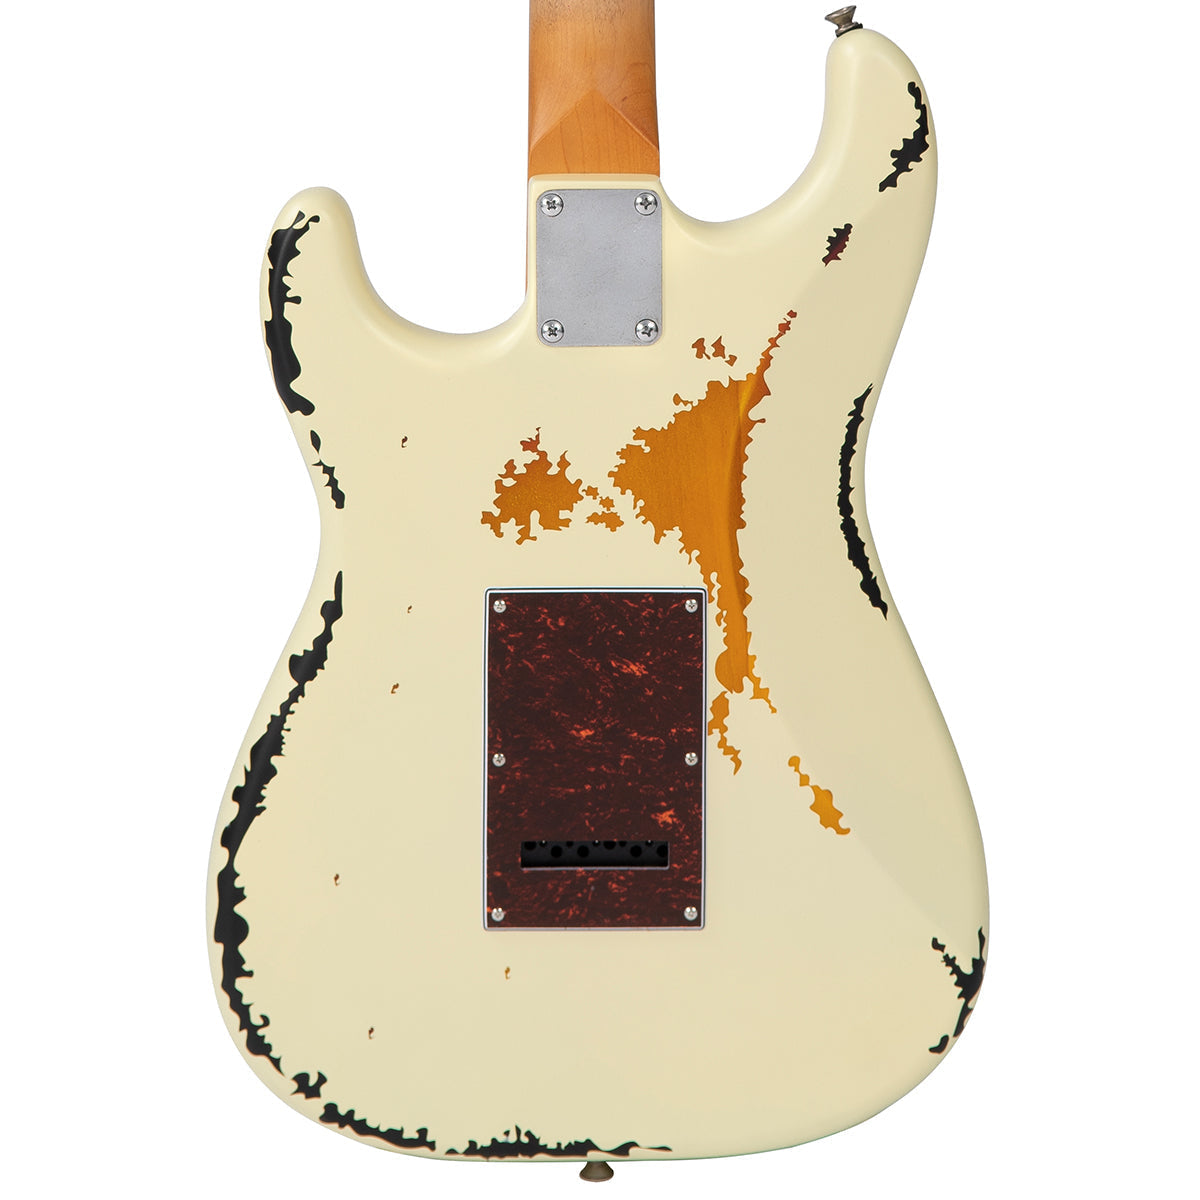 Vintage V6 ICON Electric Guitar ~ Distressed White Over Sunburst, Electric Guitar for sale at Richards Guitars.